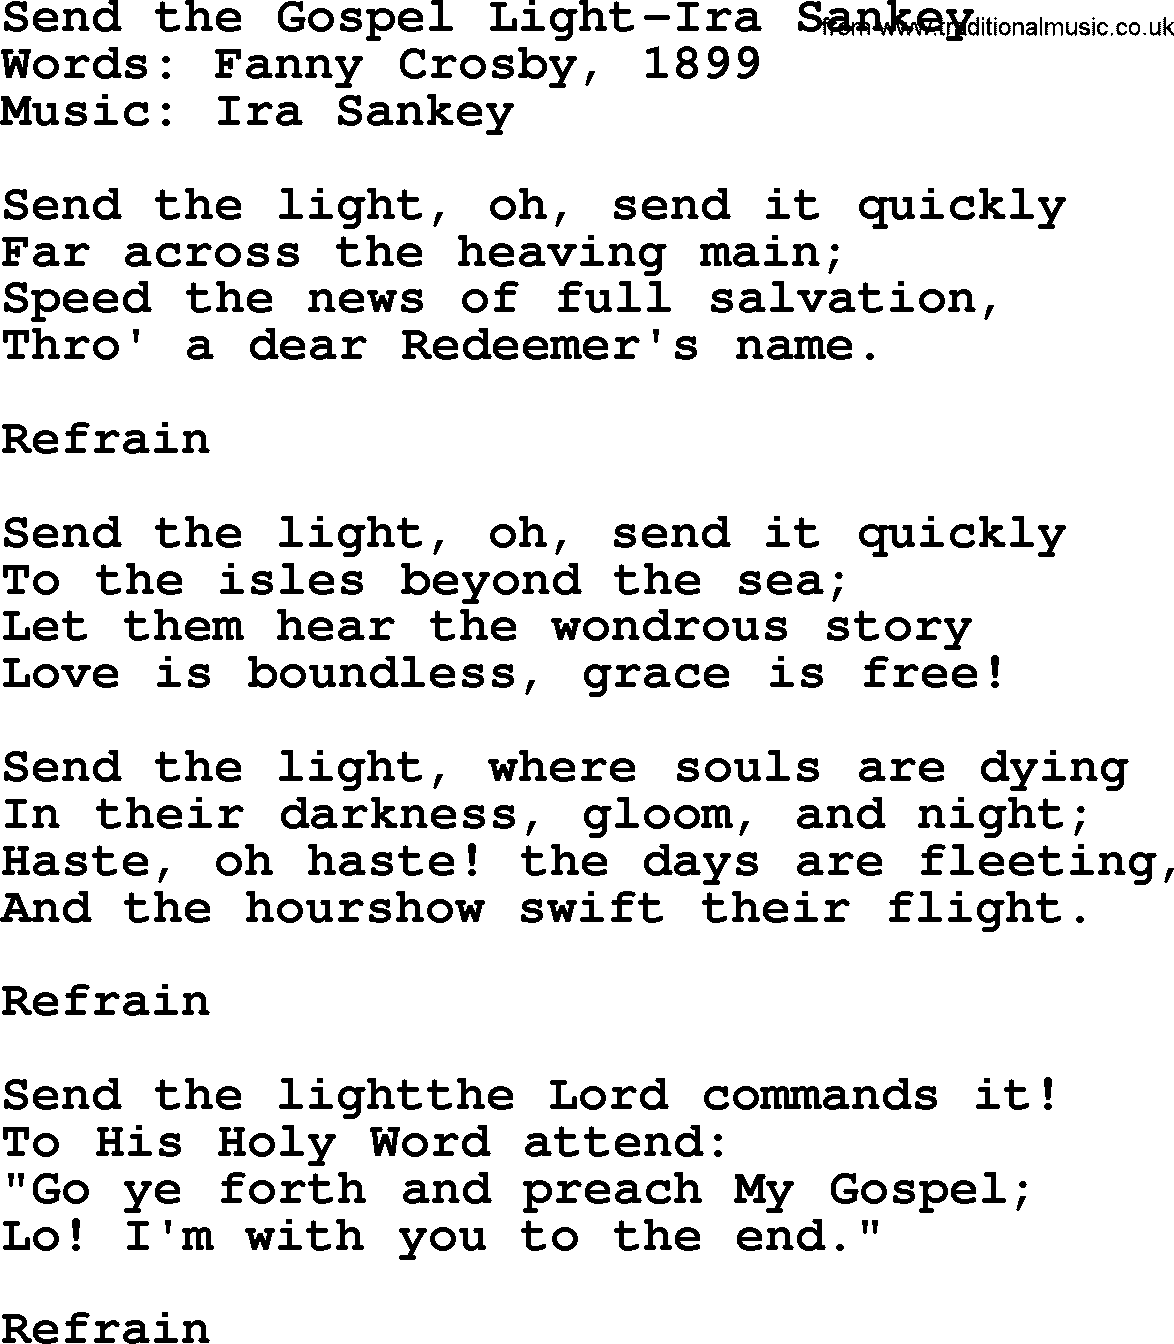 Ira Sankey hymn: Send the Gospel Light-Ira Sankey, lyrics